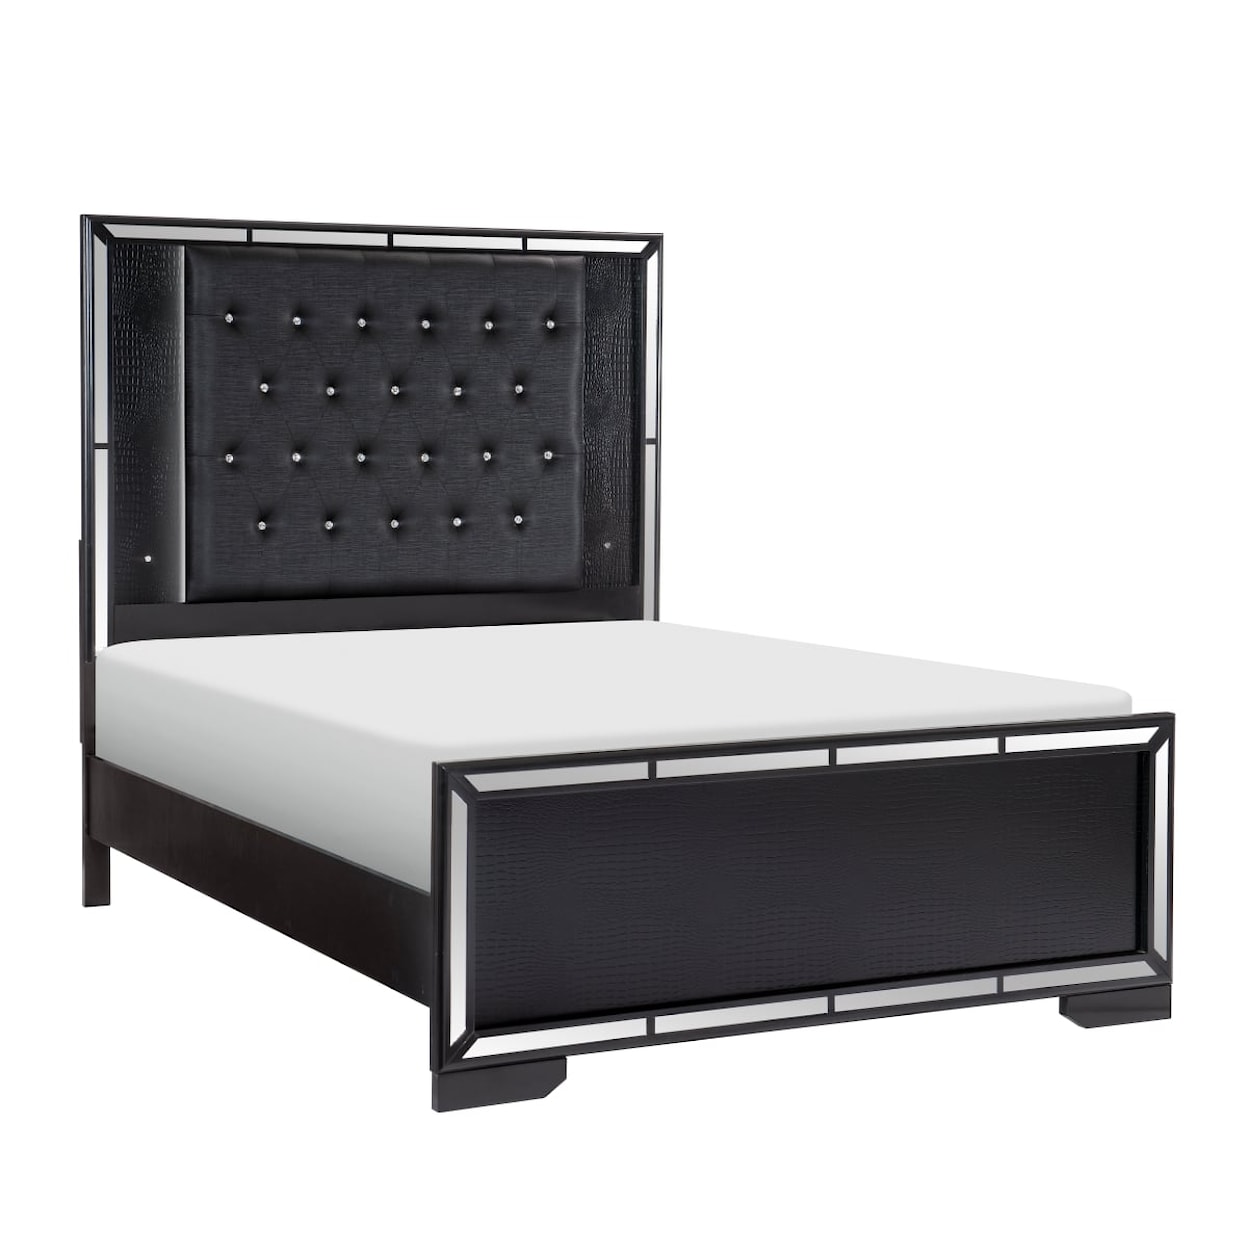 Homelegance Furniture Aveline Queen Bed